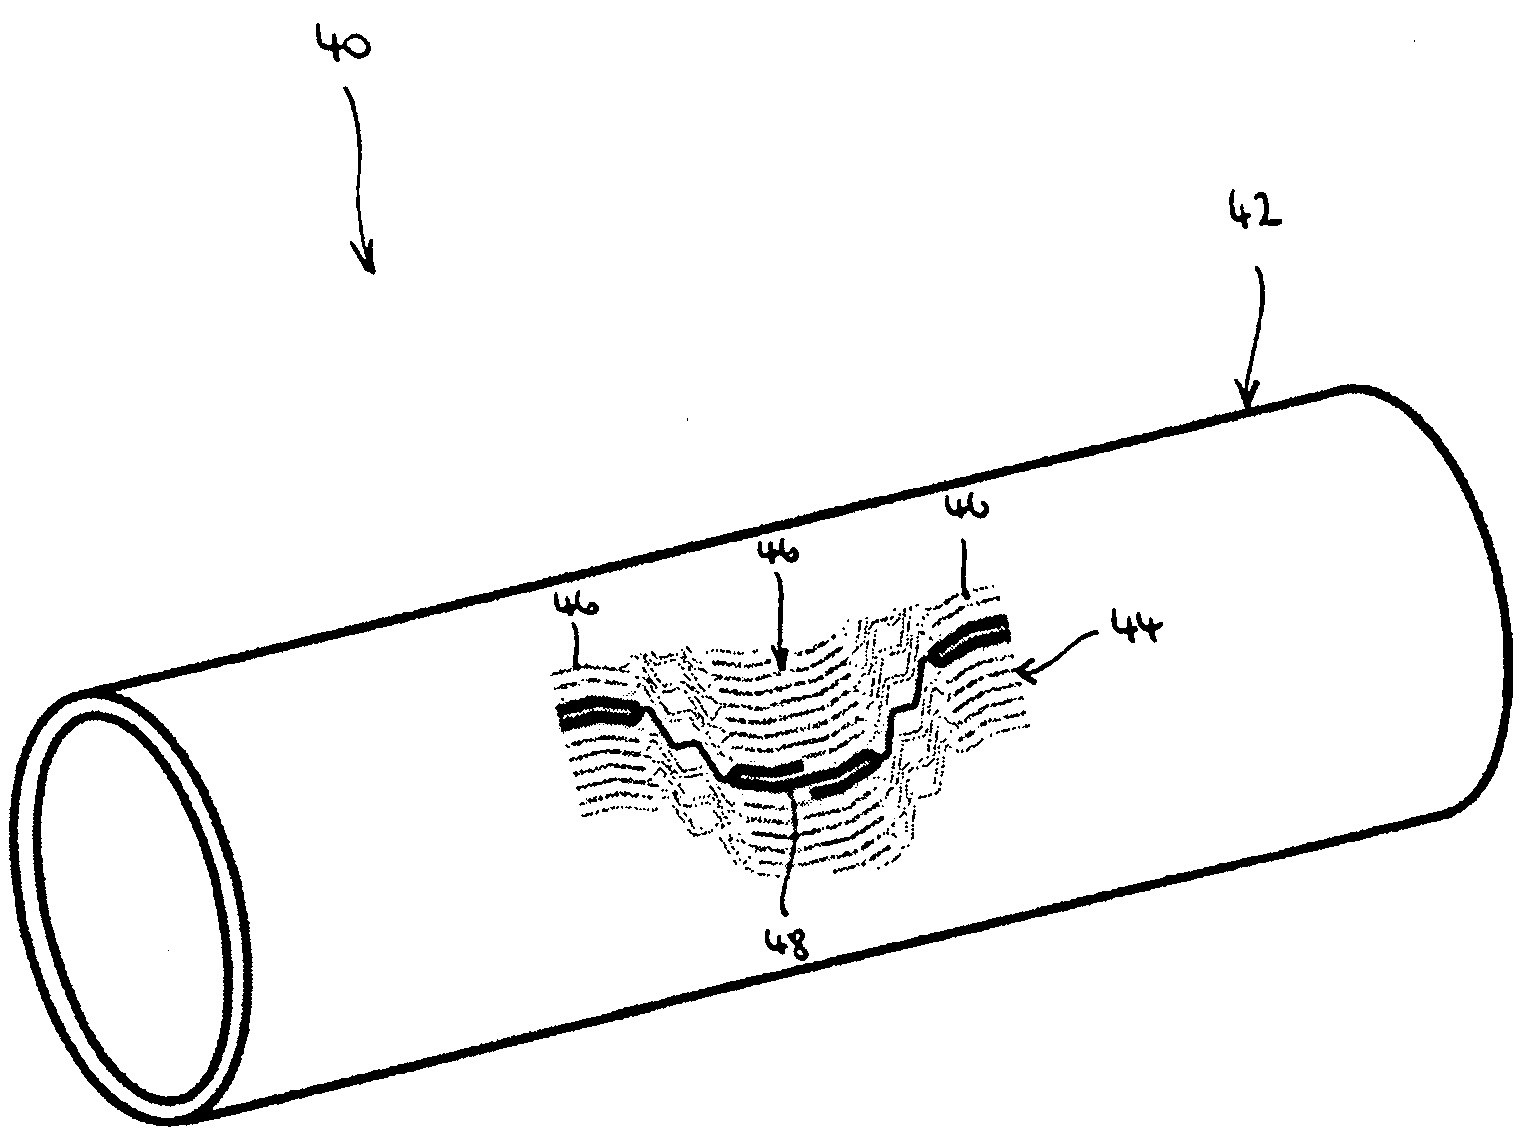 Flexible stent with torque-absorbing connectors